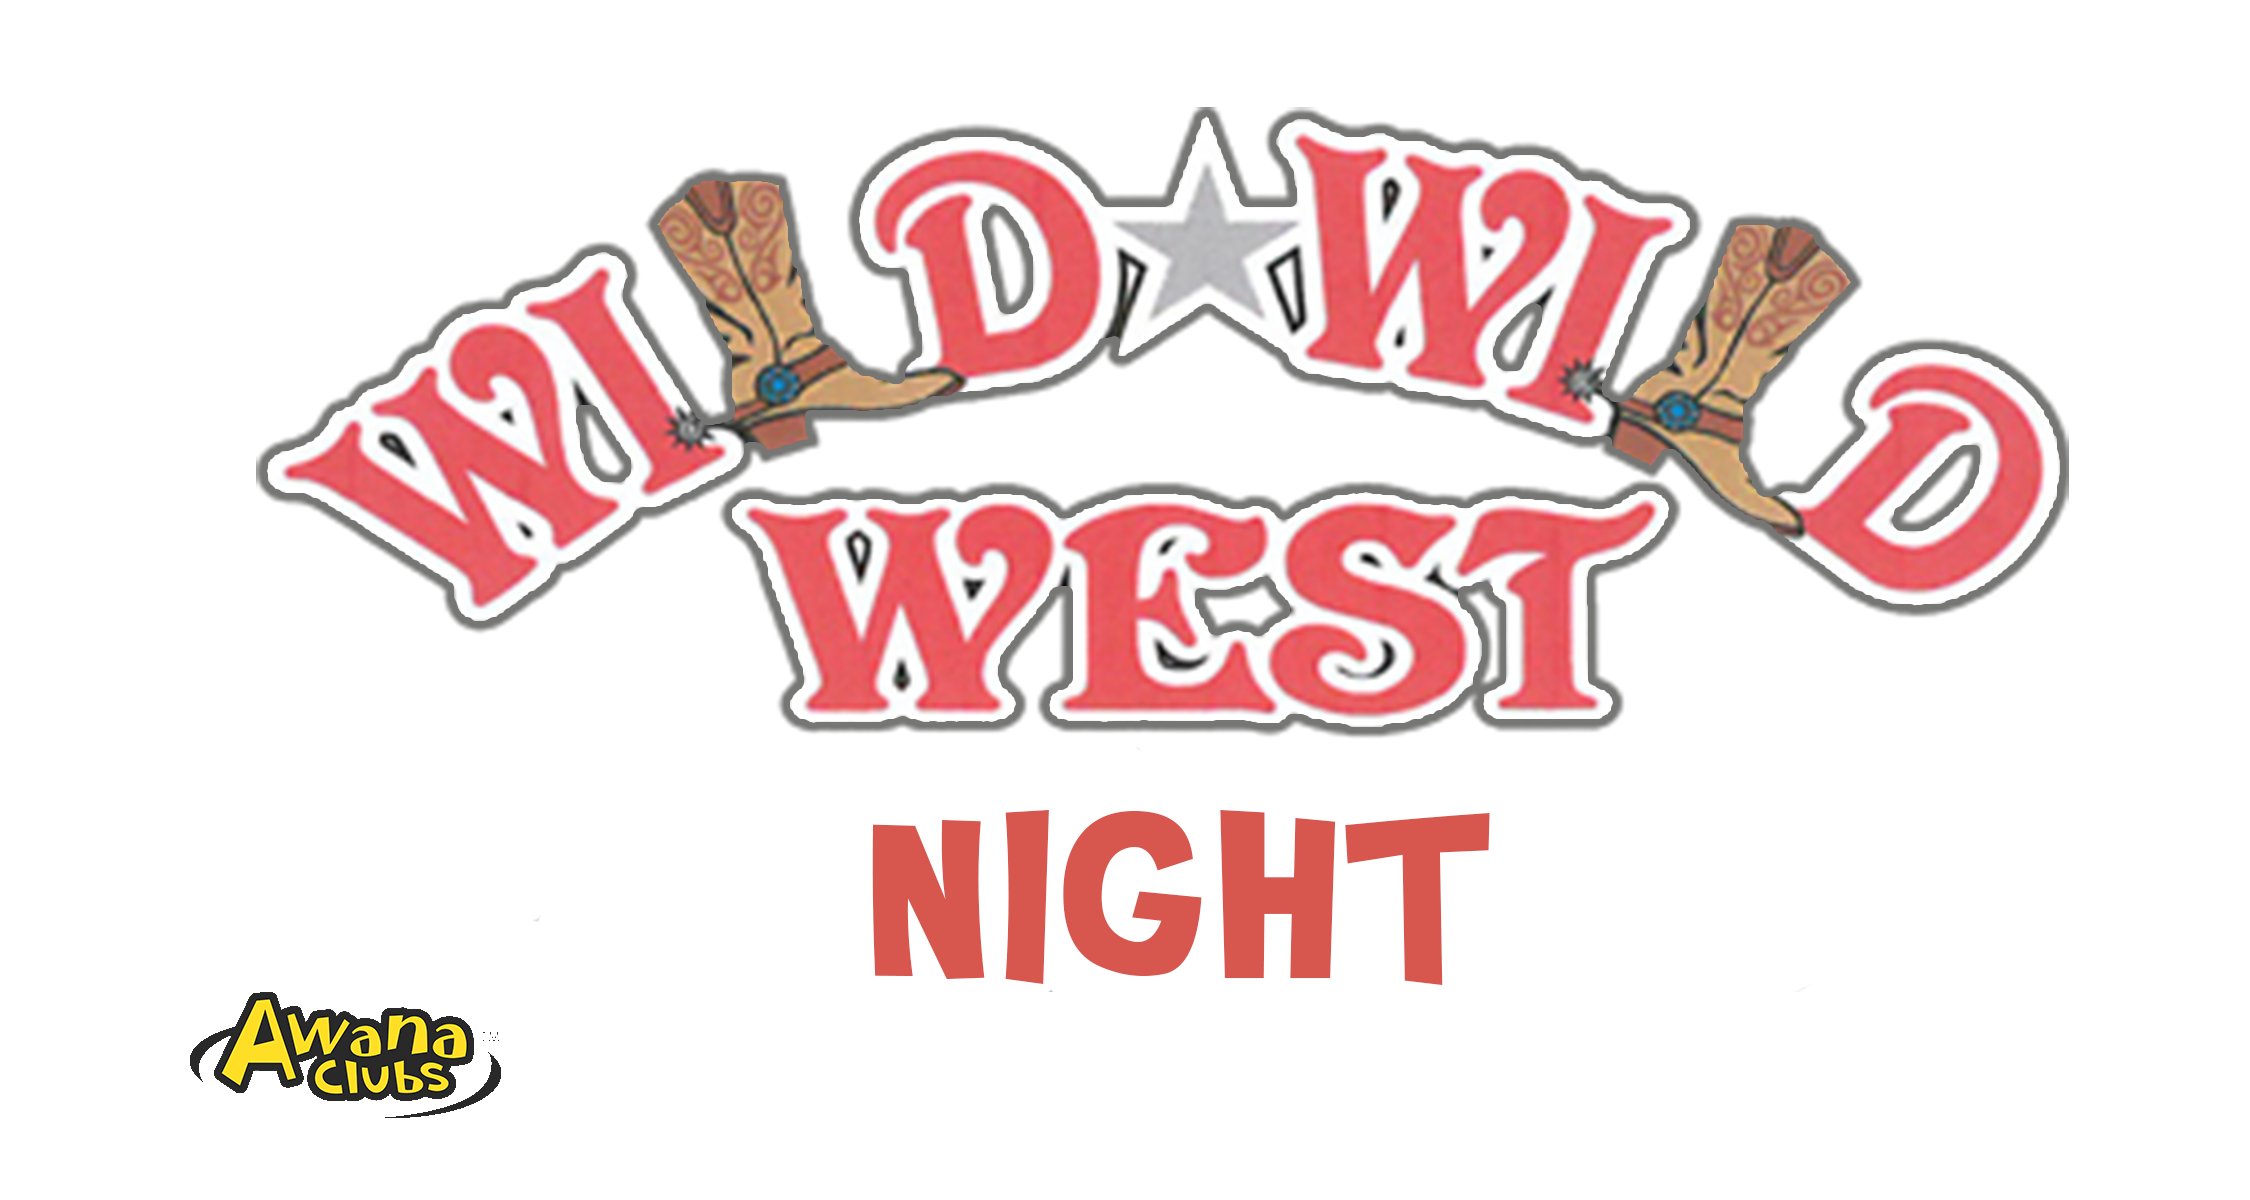 Awana Wild West image